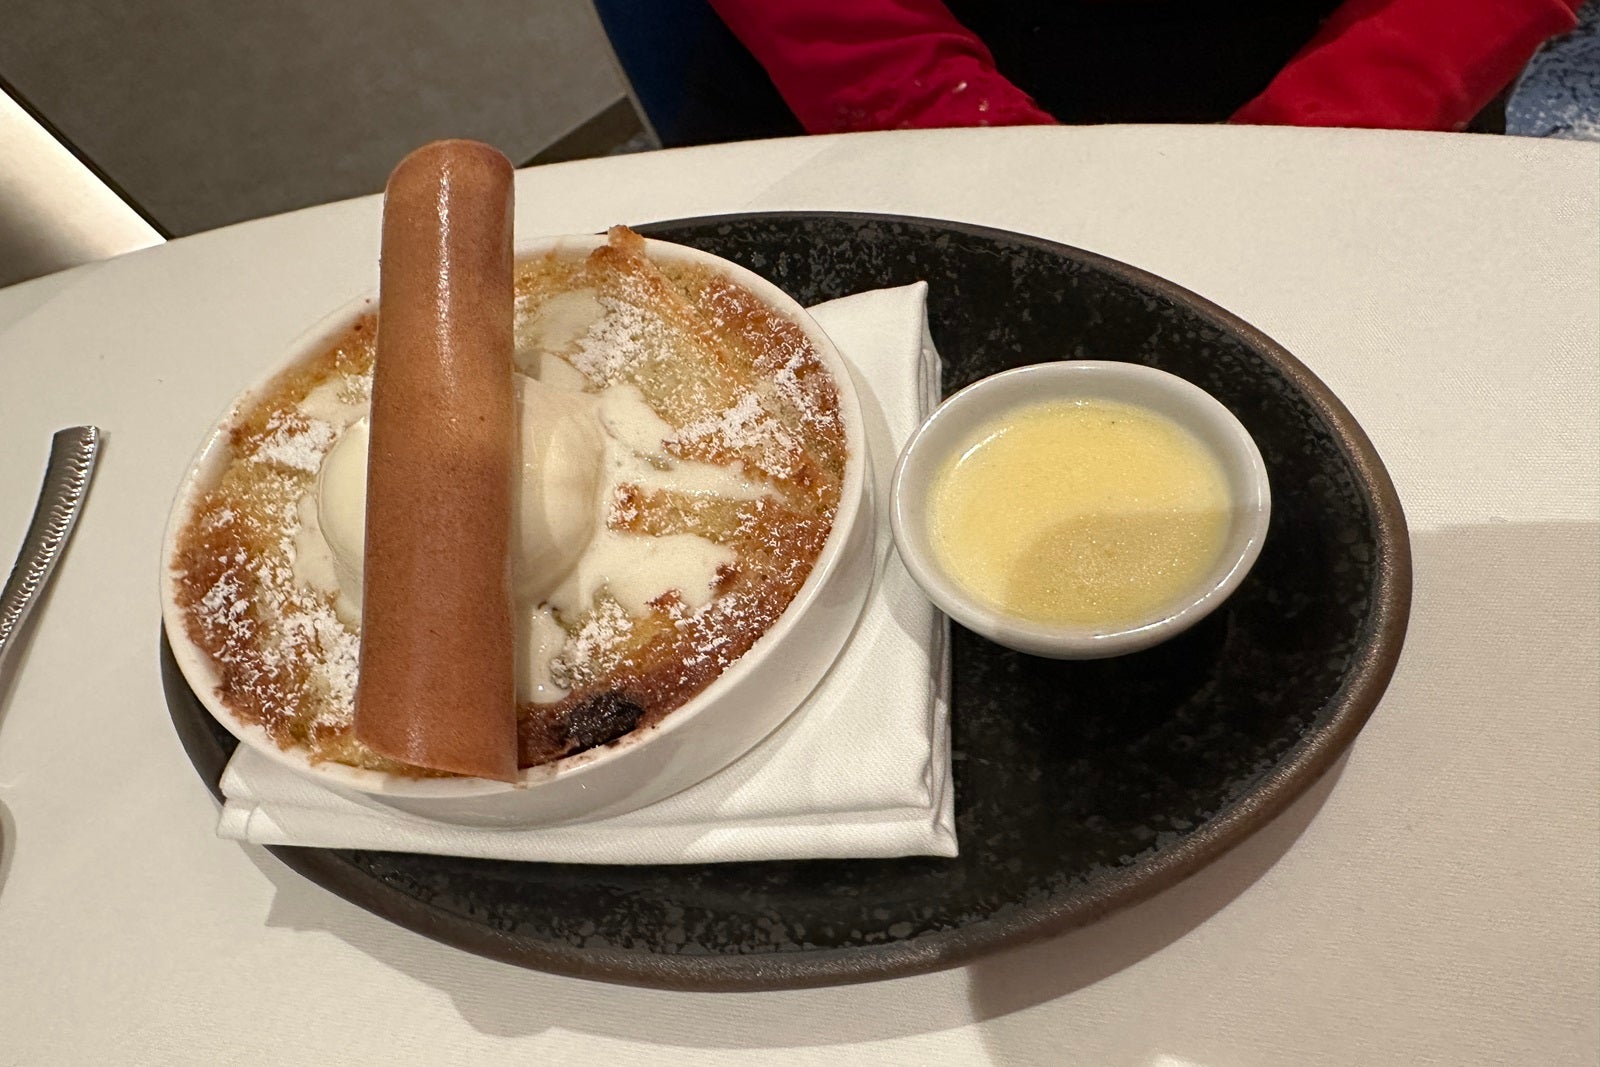 A bread pudding dessert with ice cream